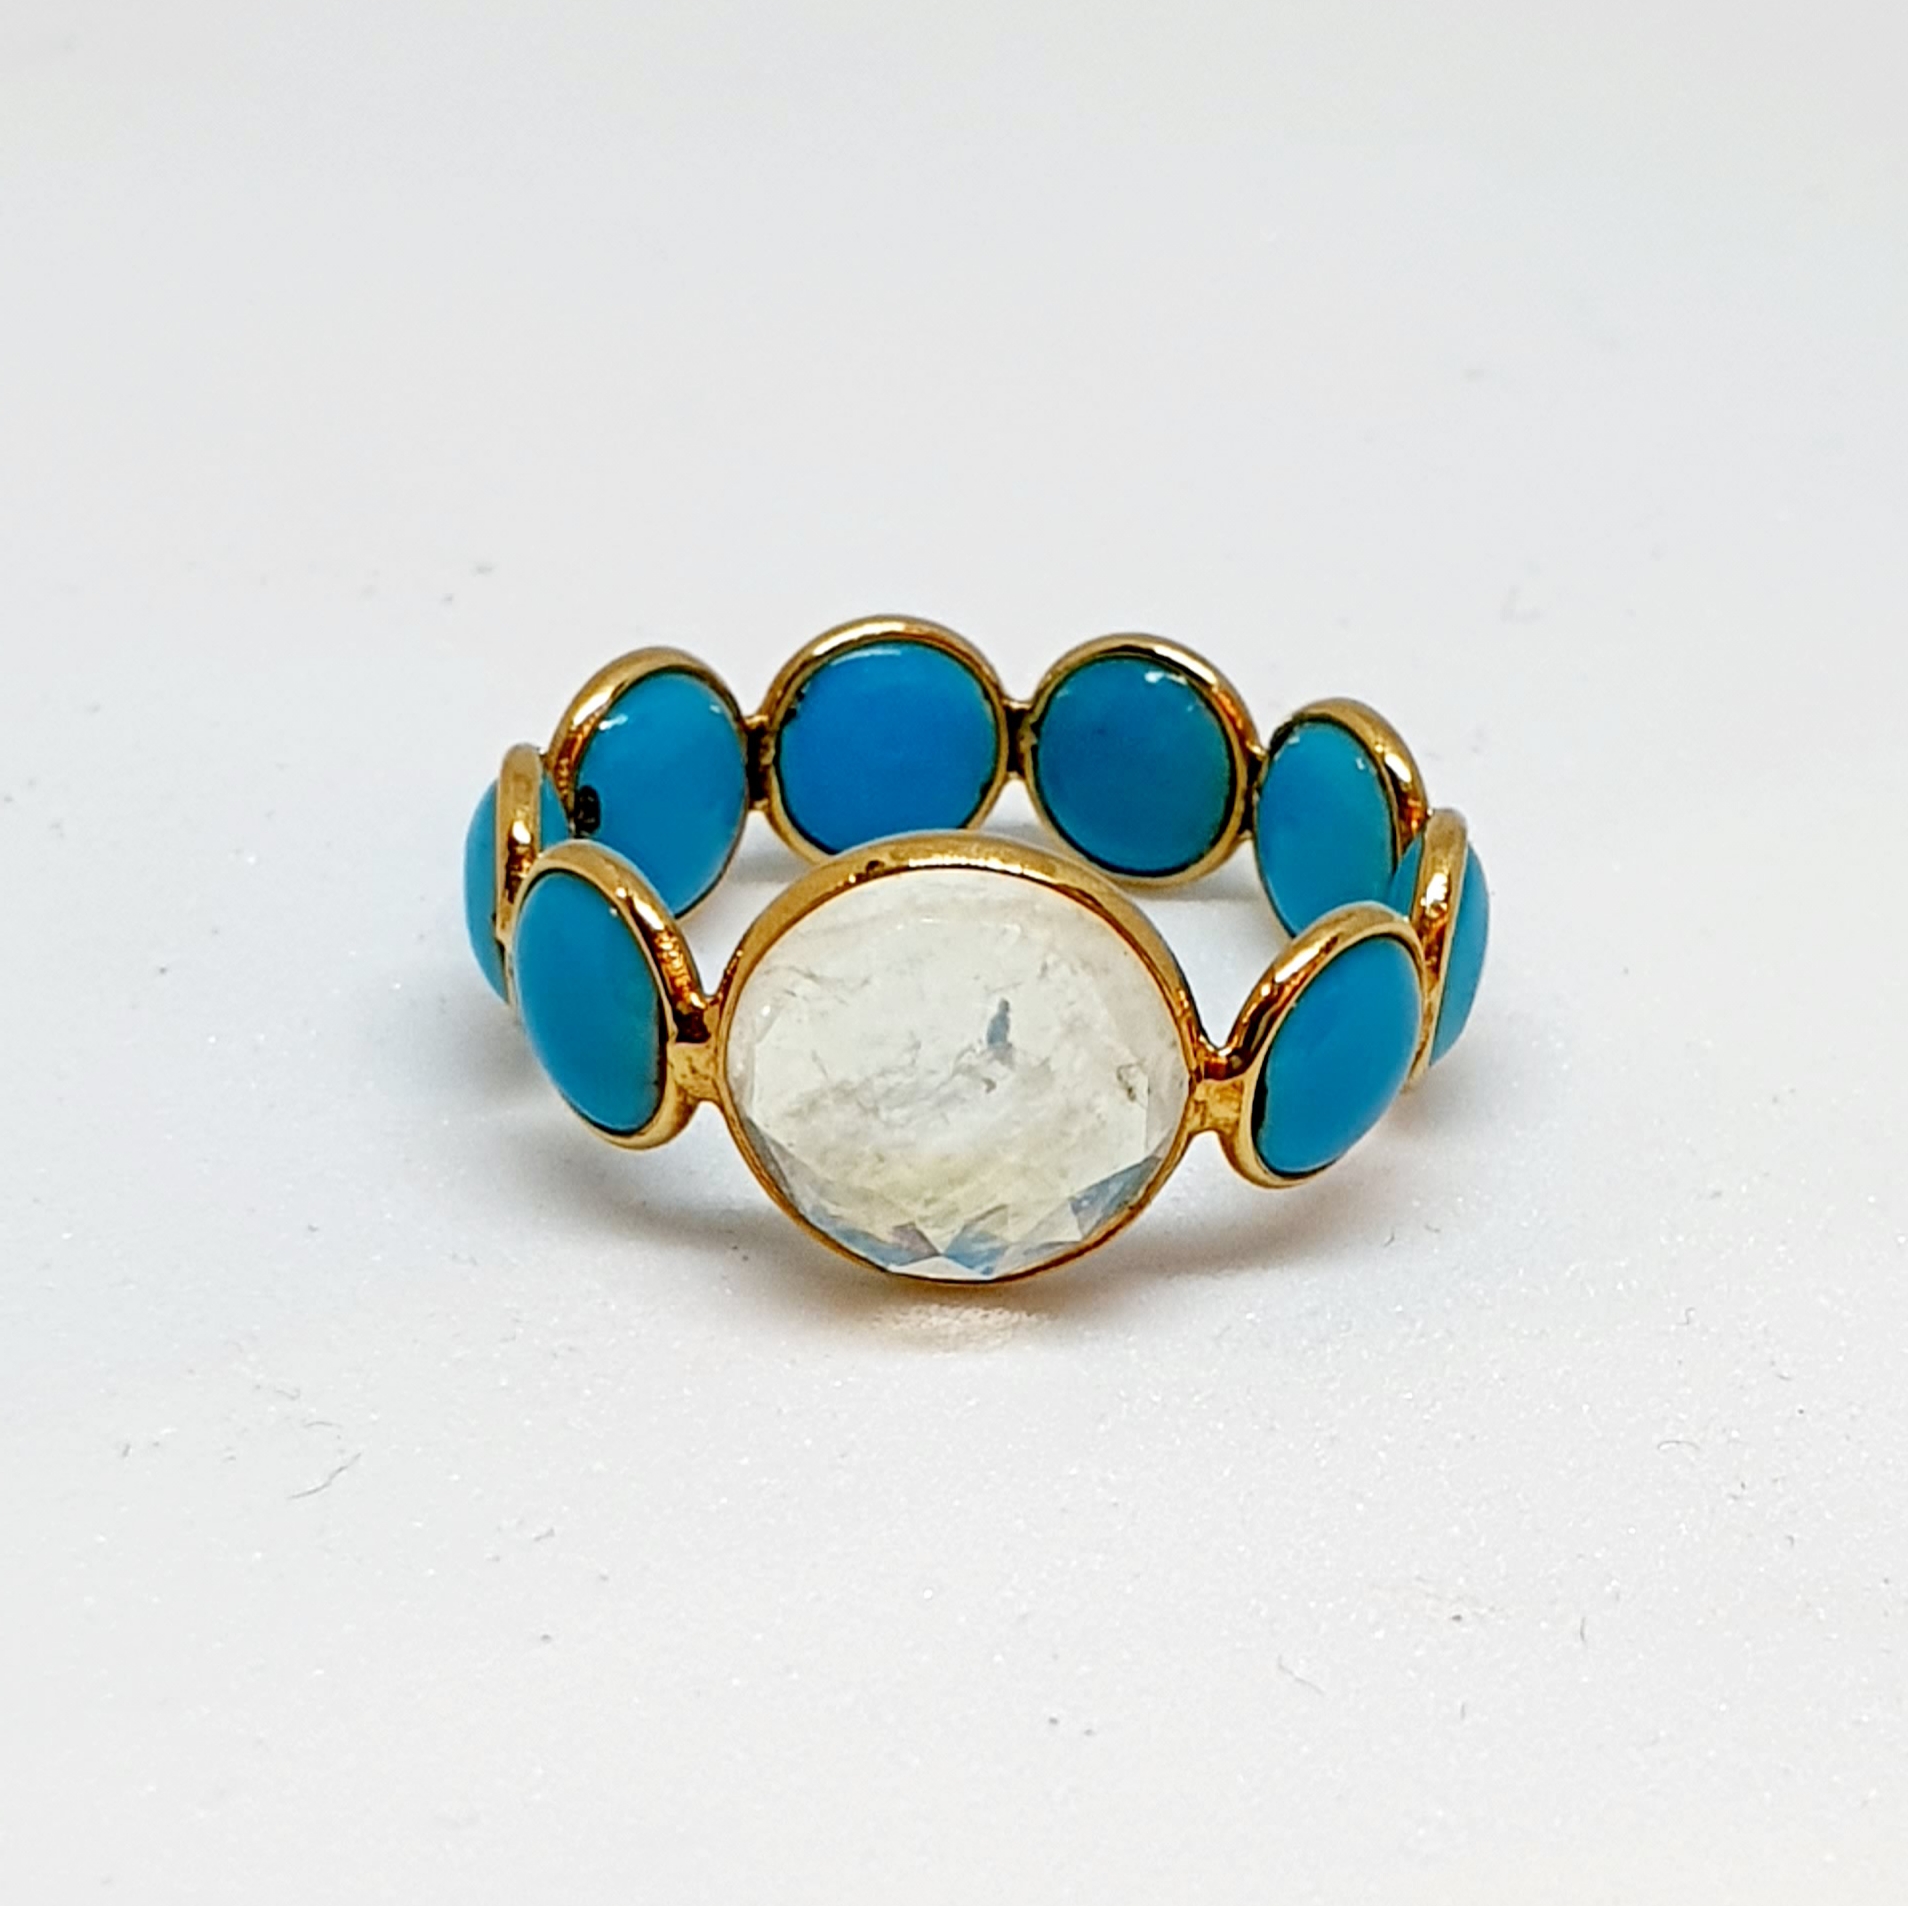 Regard Jewelry - Estate Three Stone Turquoise Ring at Regard